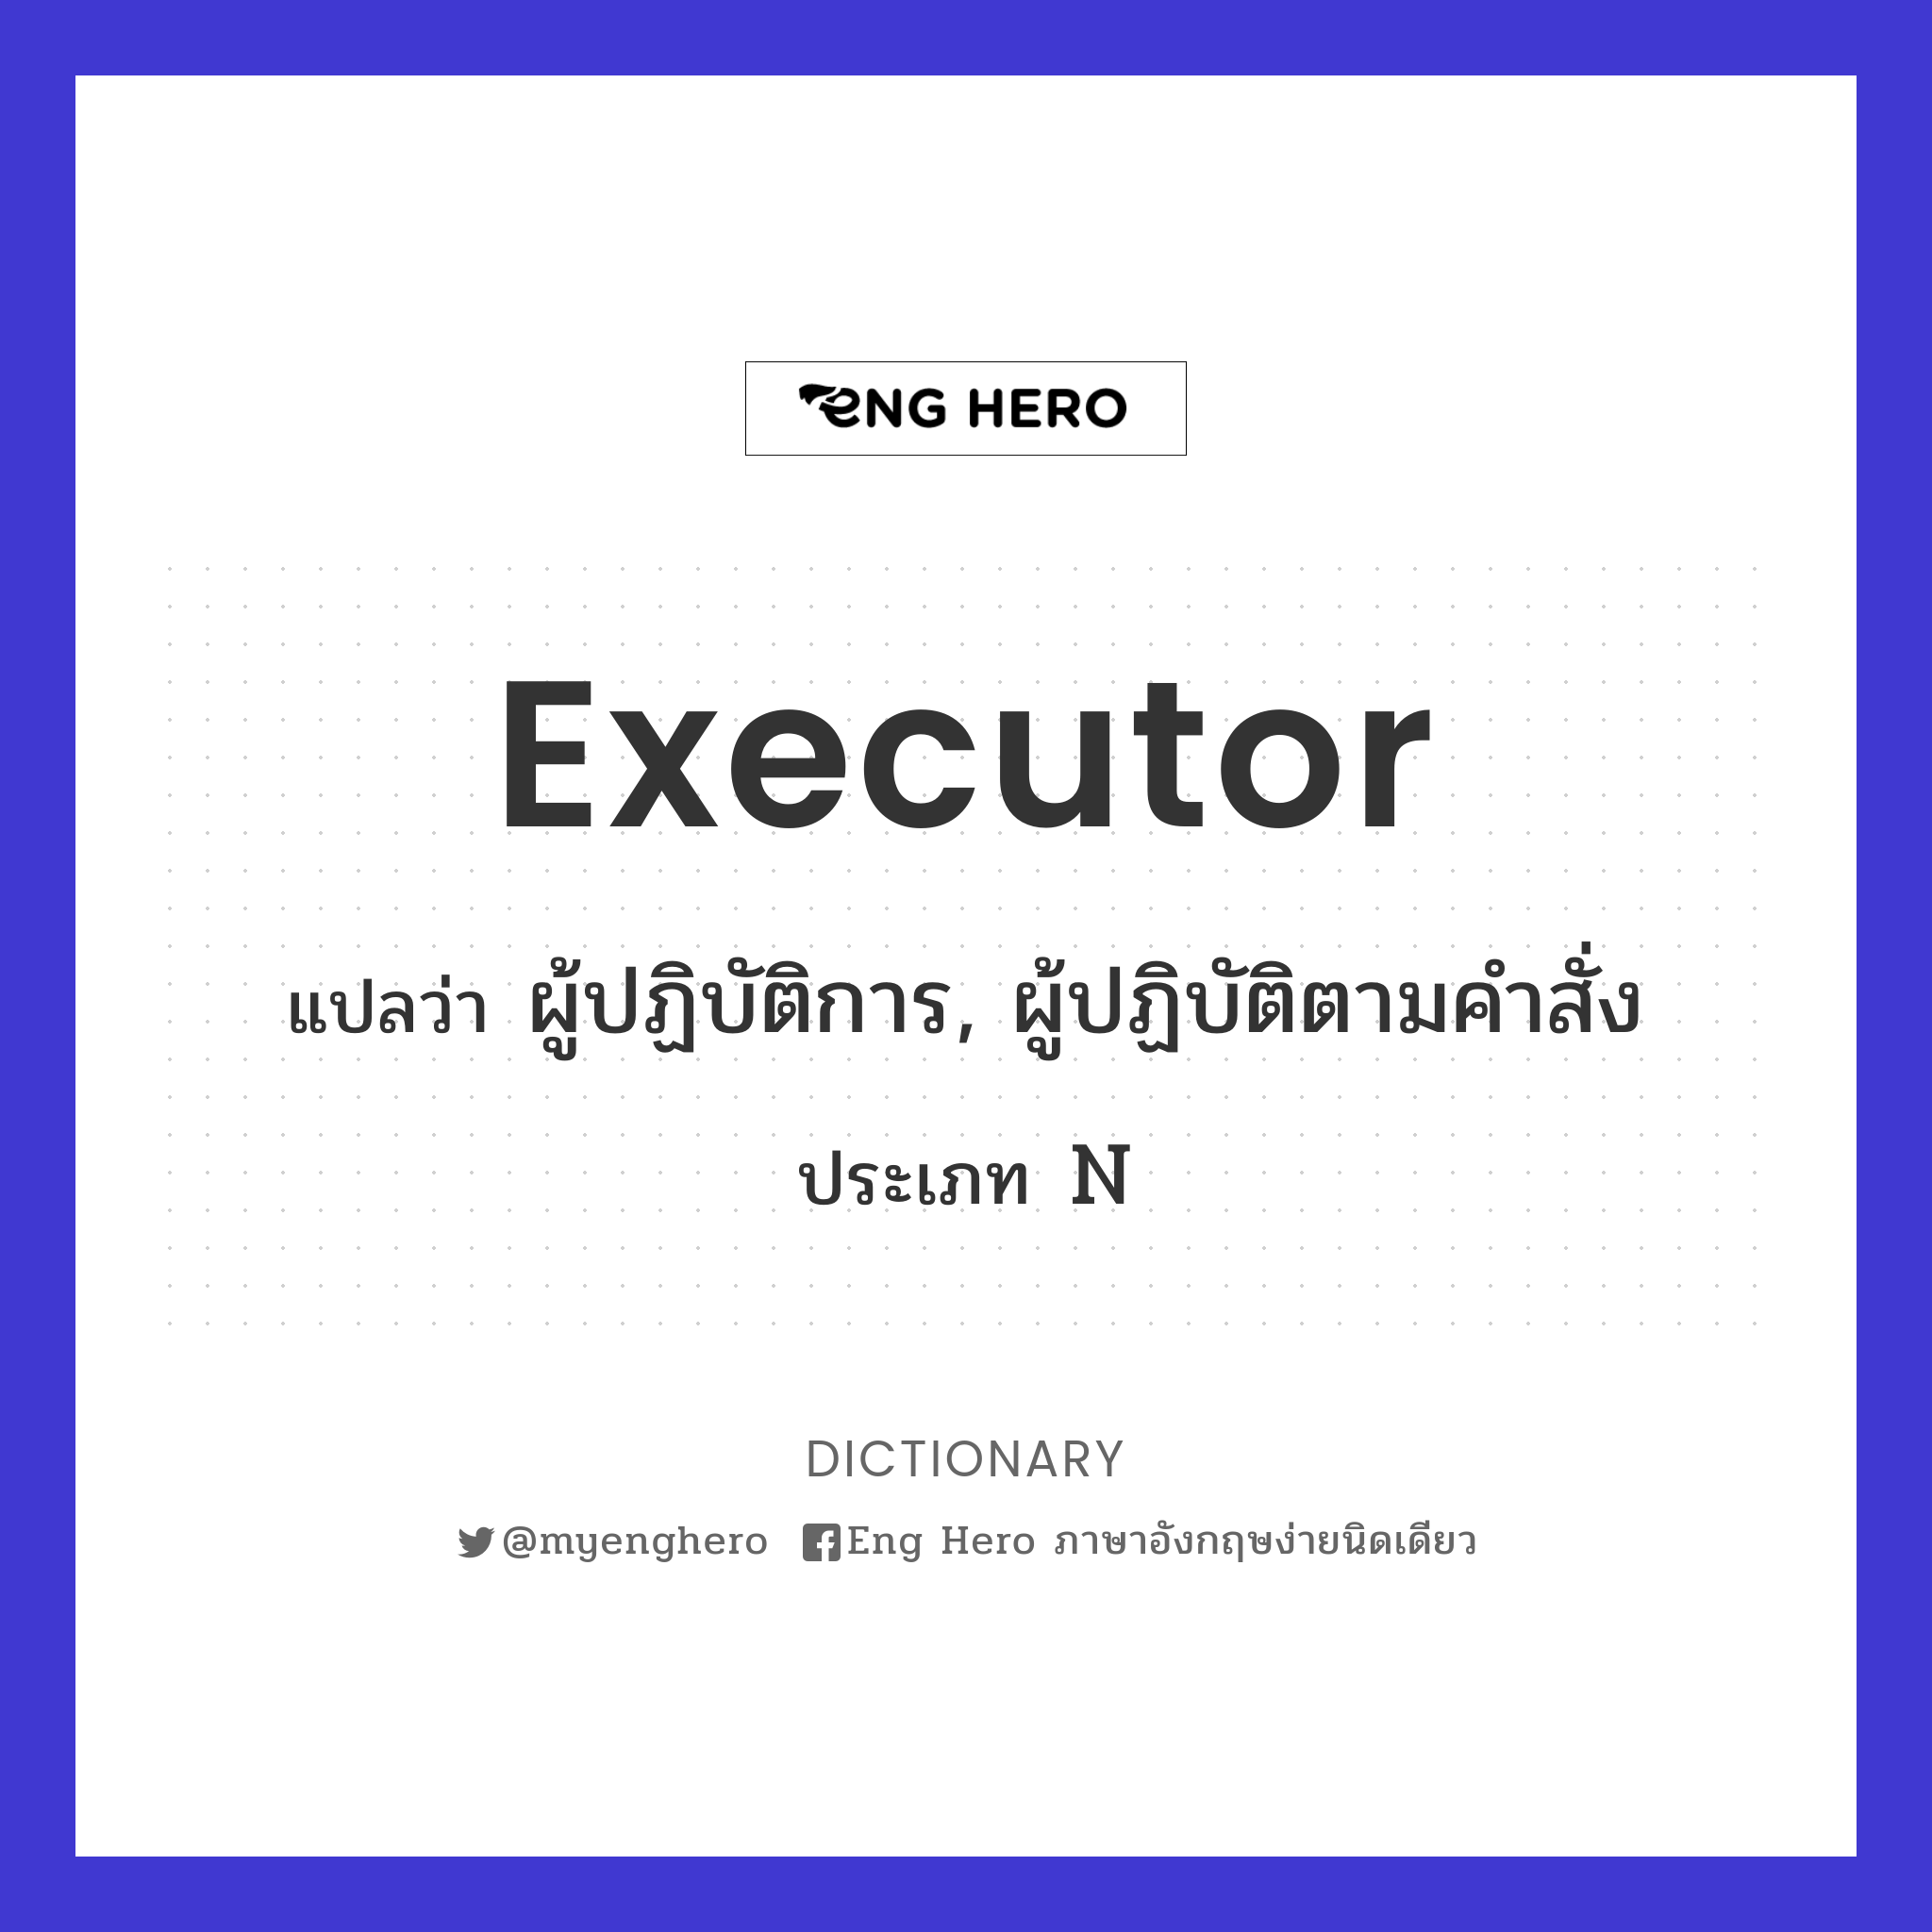 executor